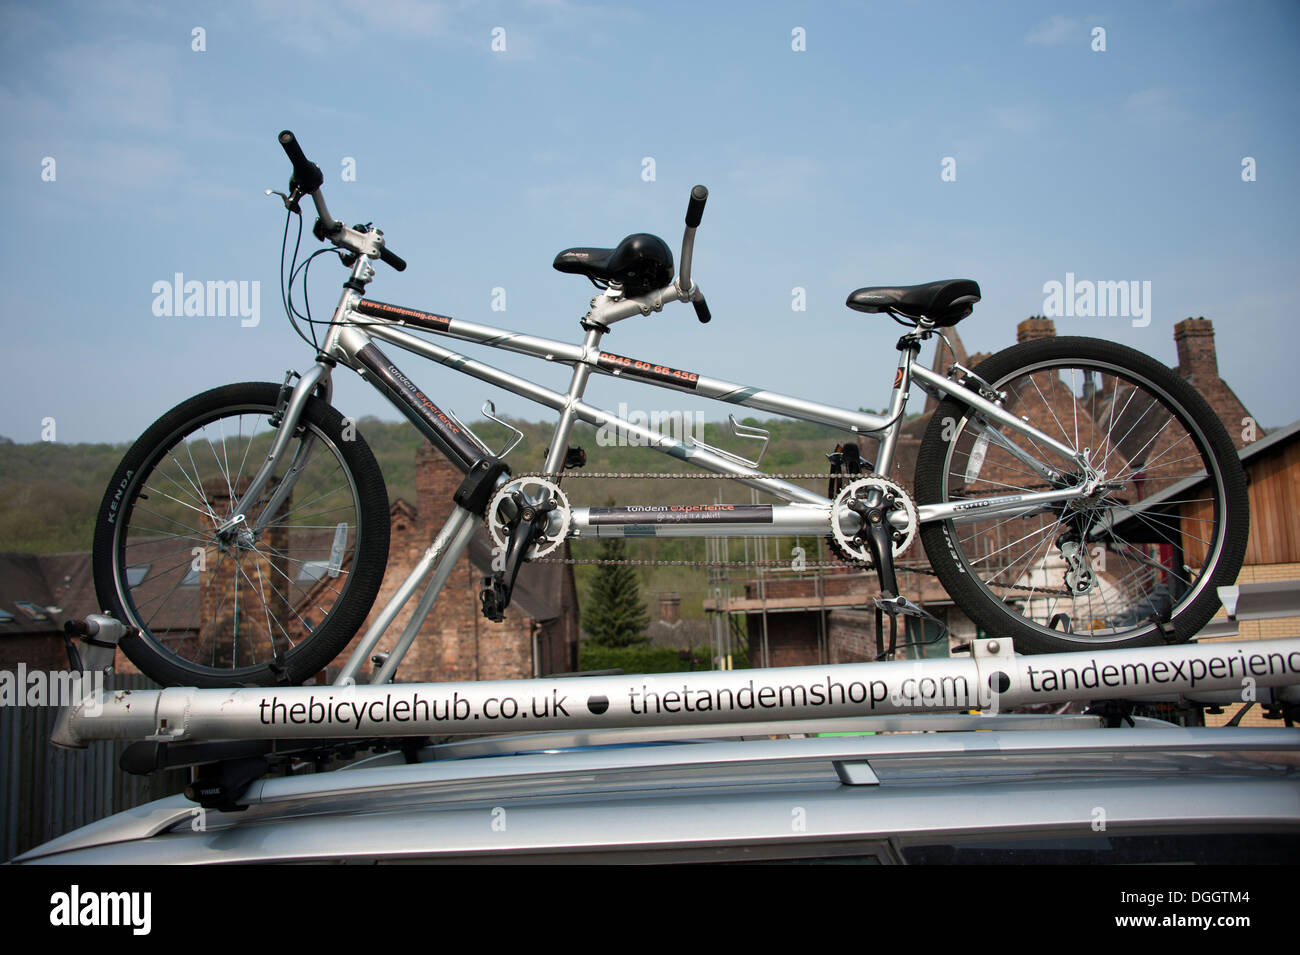 Tandem-Fahrrad-Fahrrad auf Autotransporter Dach Stockfotografie - Alamy